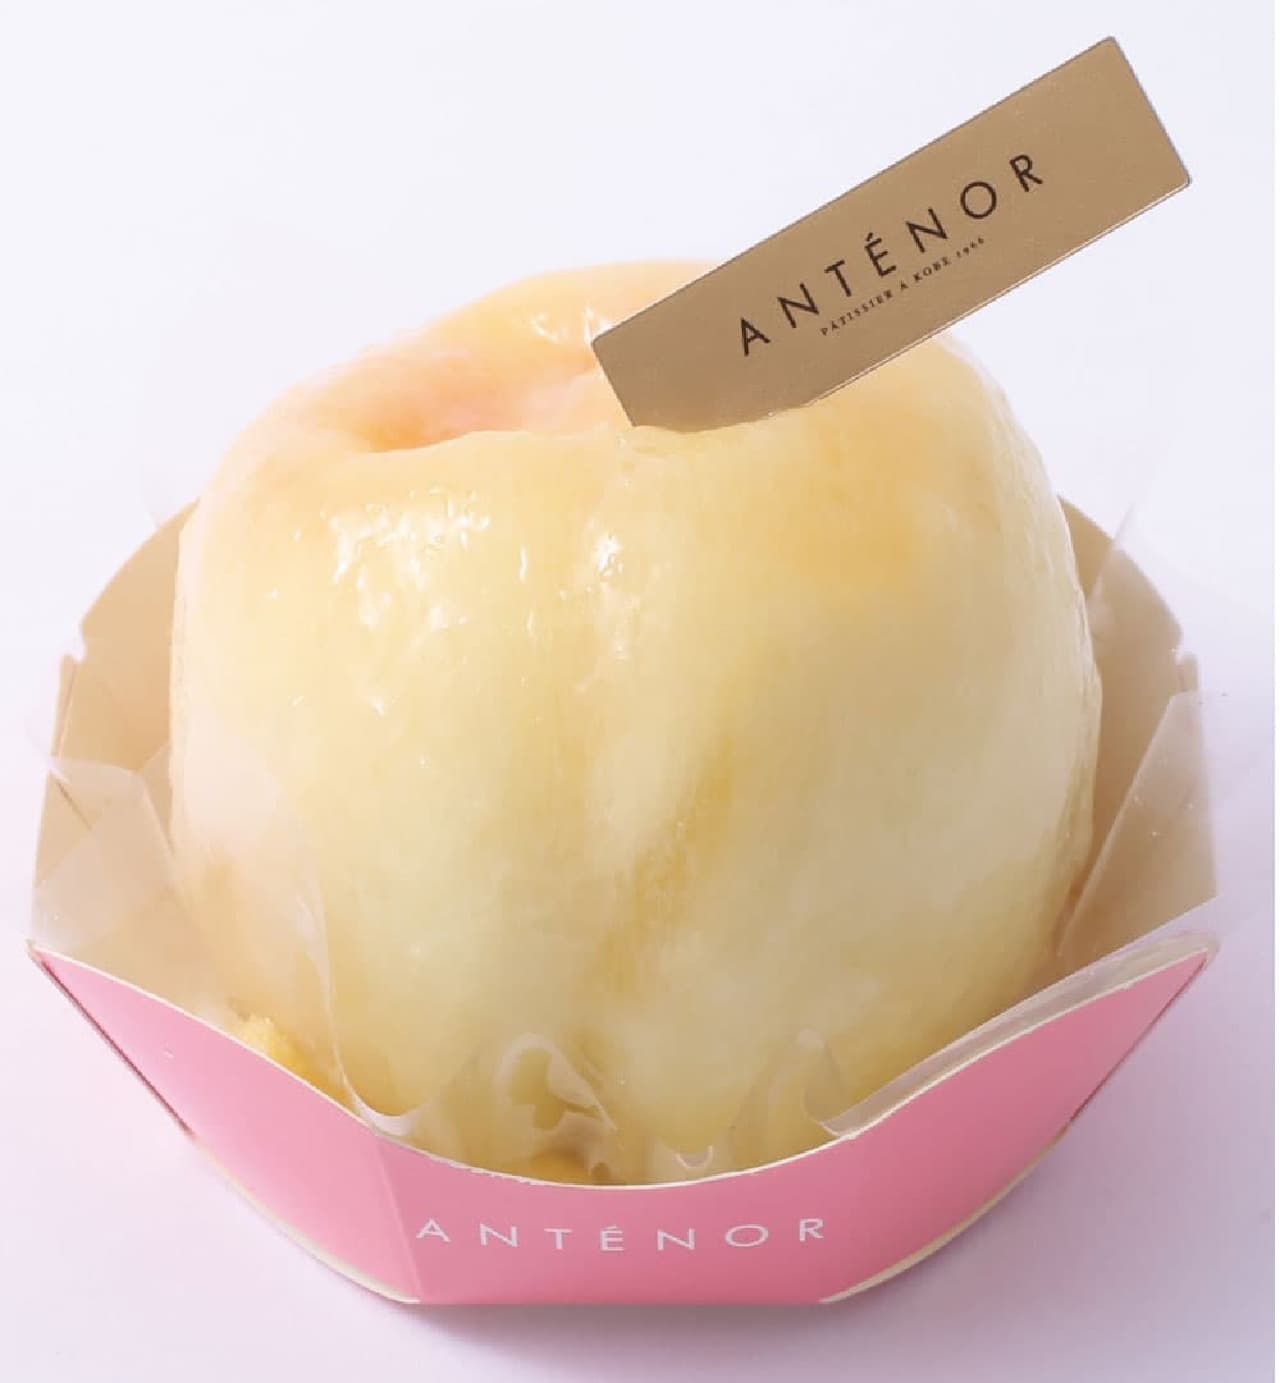 Antenor "Whole Peach Cake